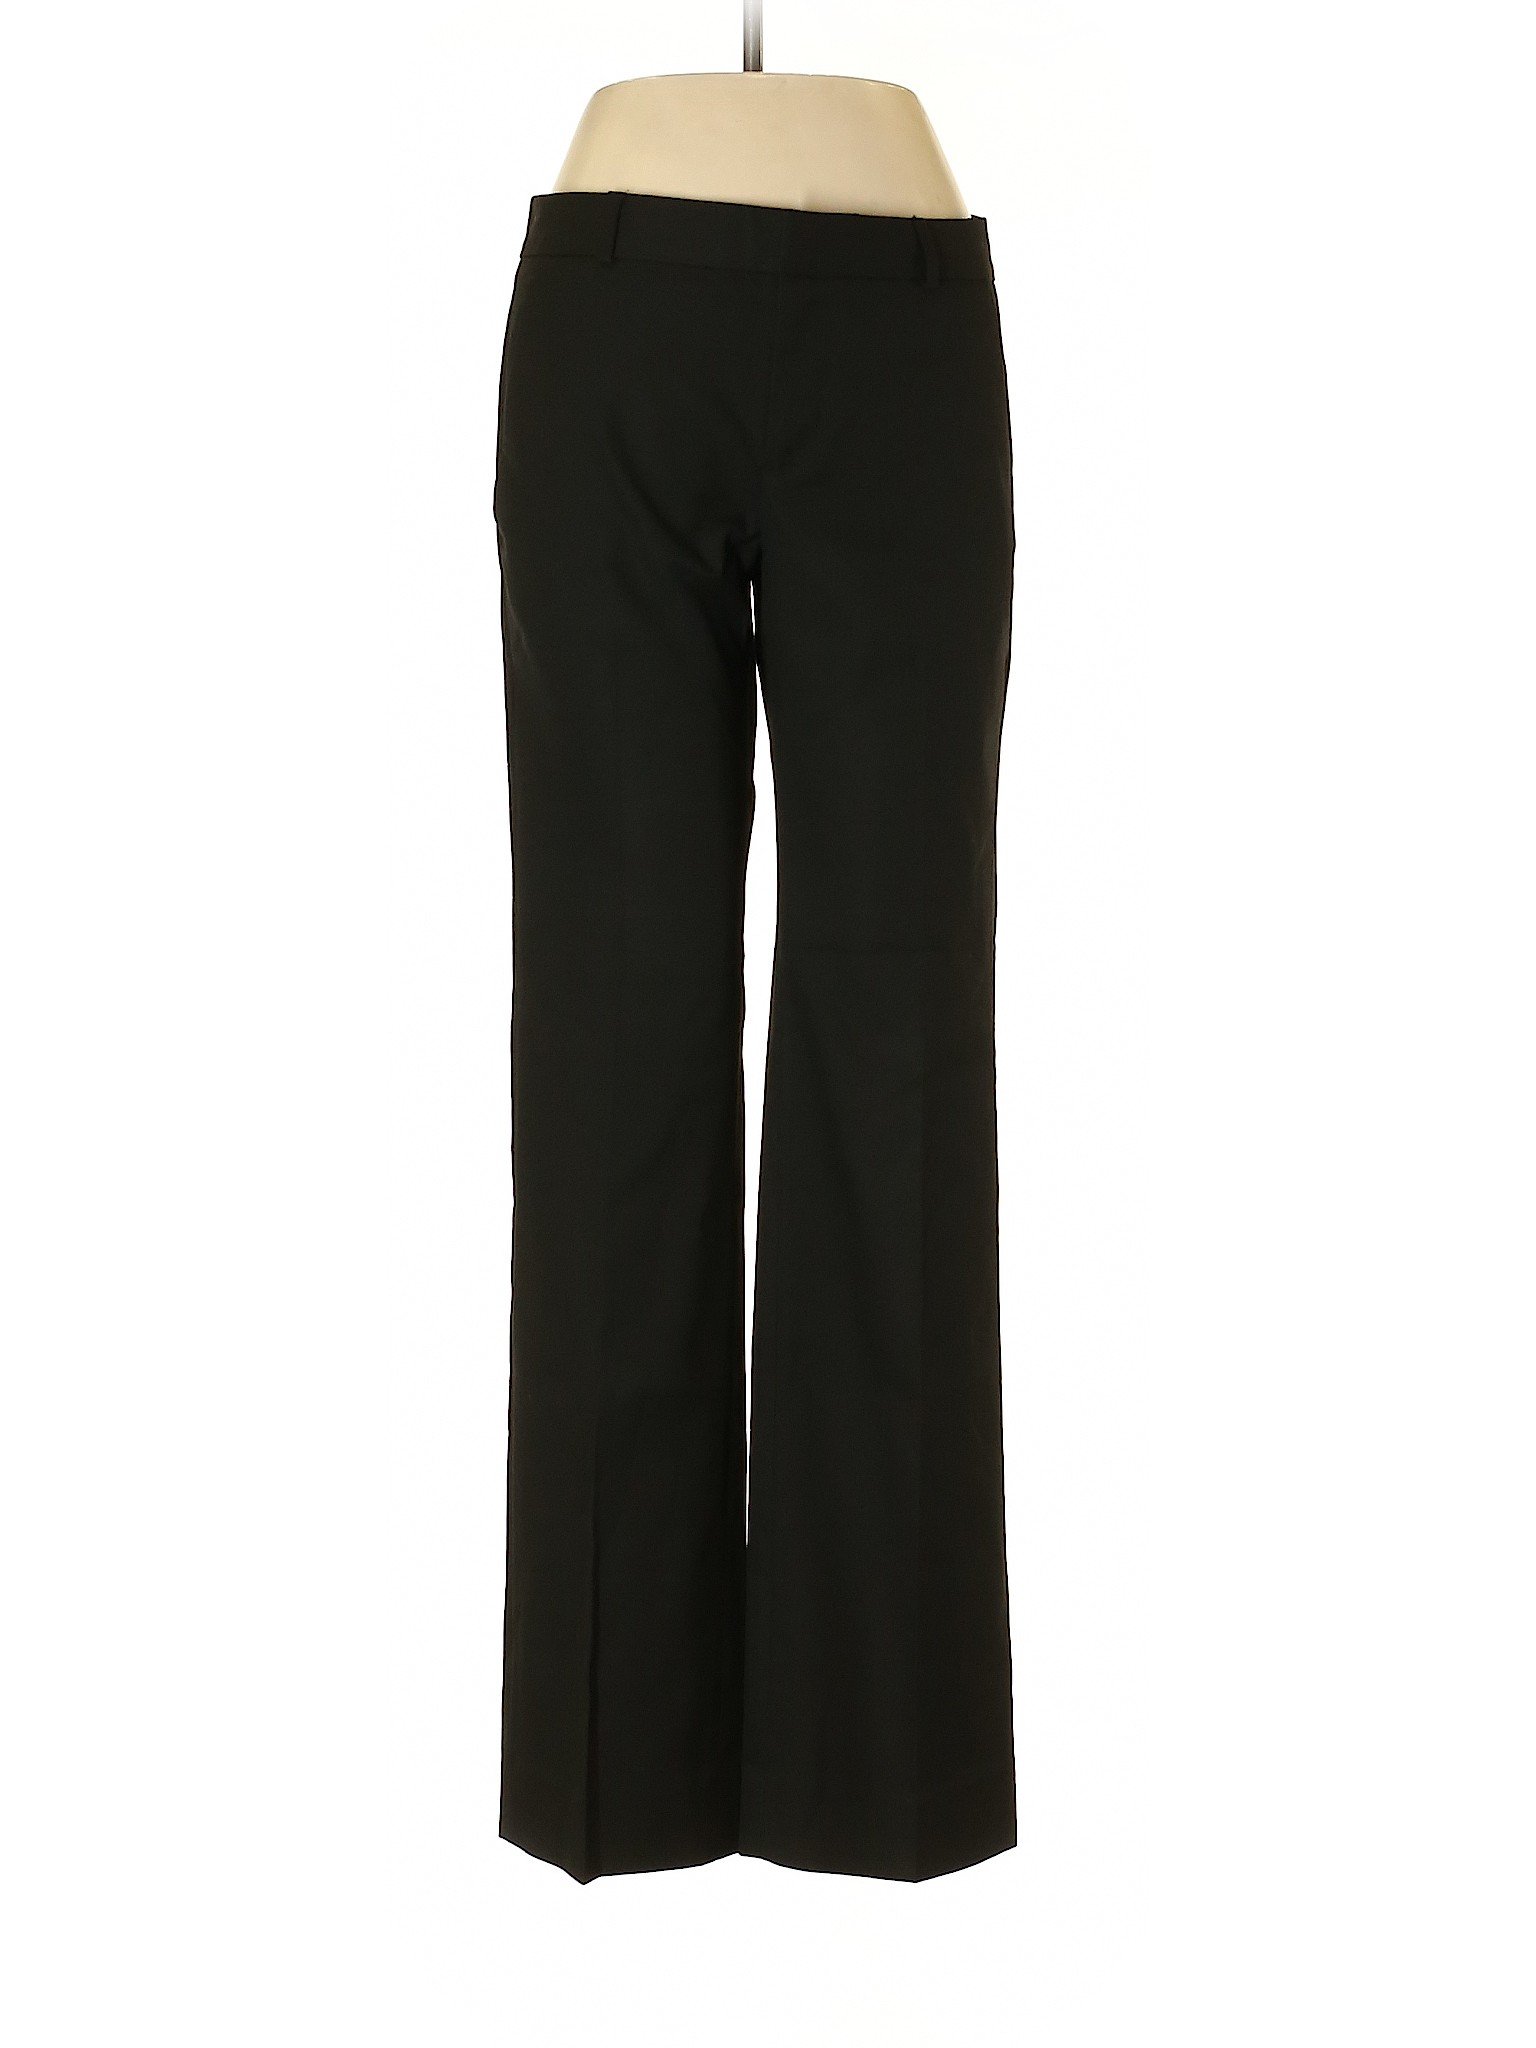 Banana Republic Factory Store Women Black Dress Pants 4 Petites | eBay